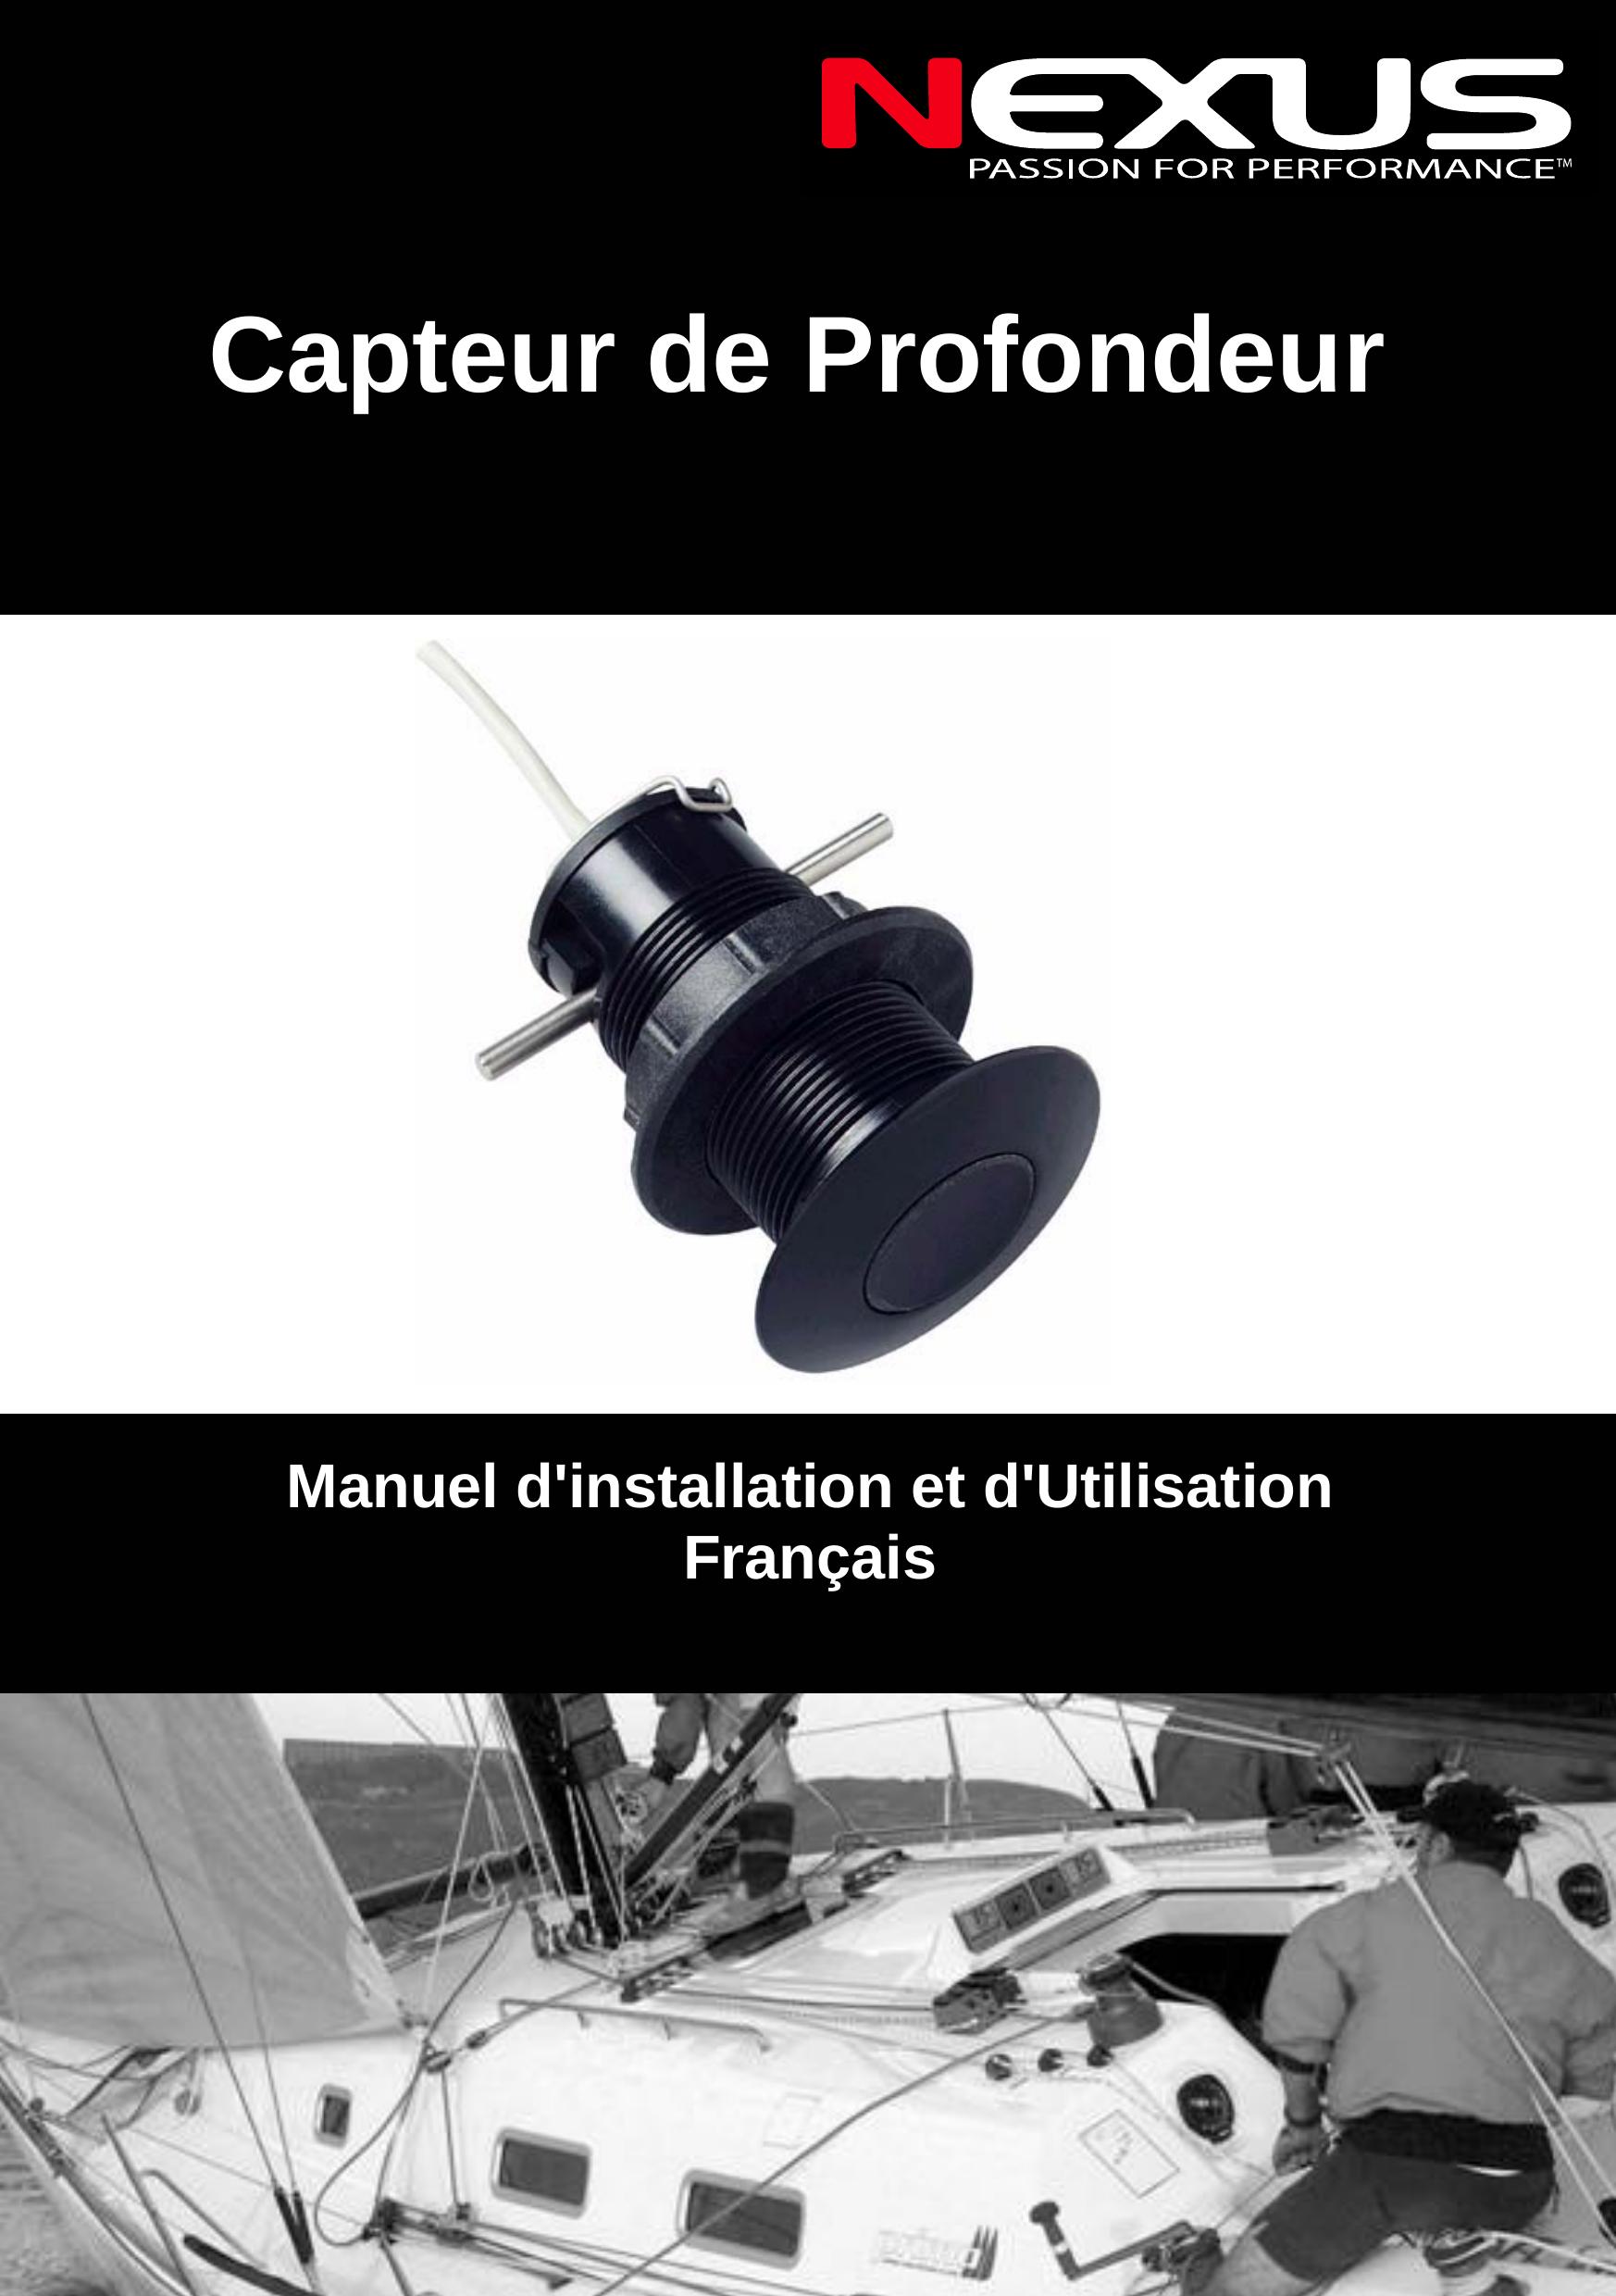 Nexus 21 CAPTEUR DE PROFONDEUR Refrigerator User Manual